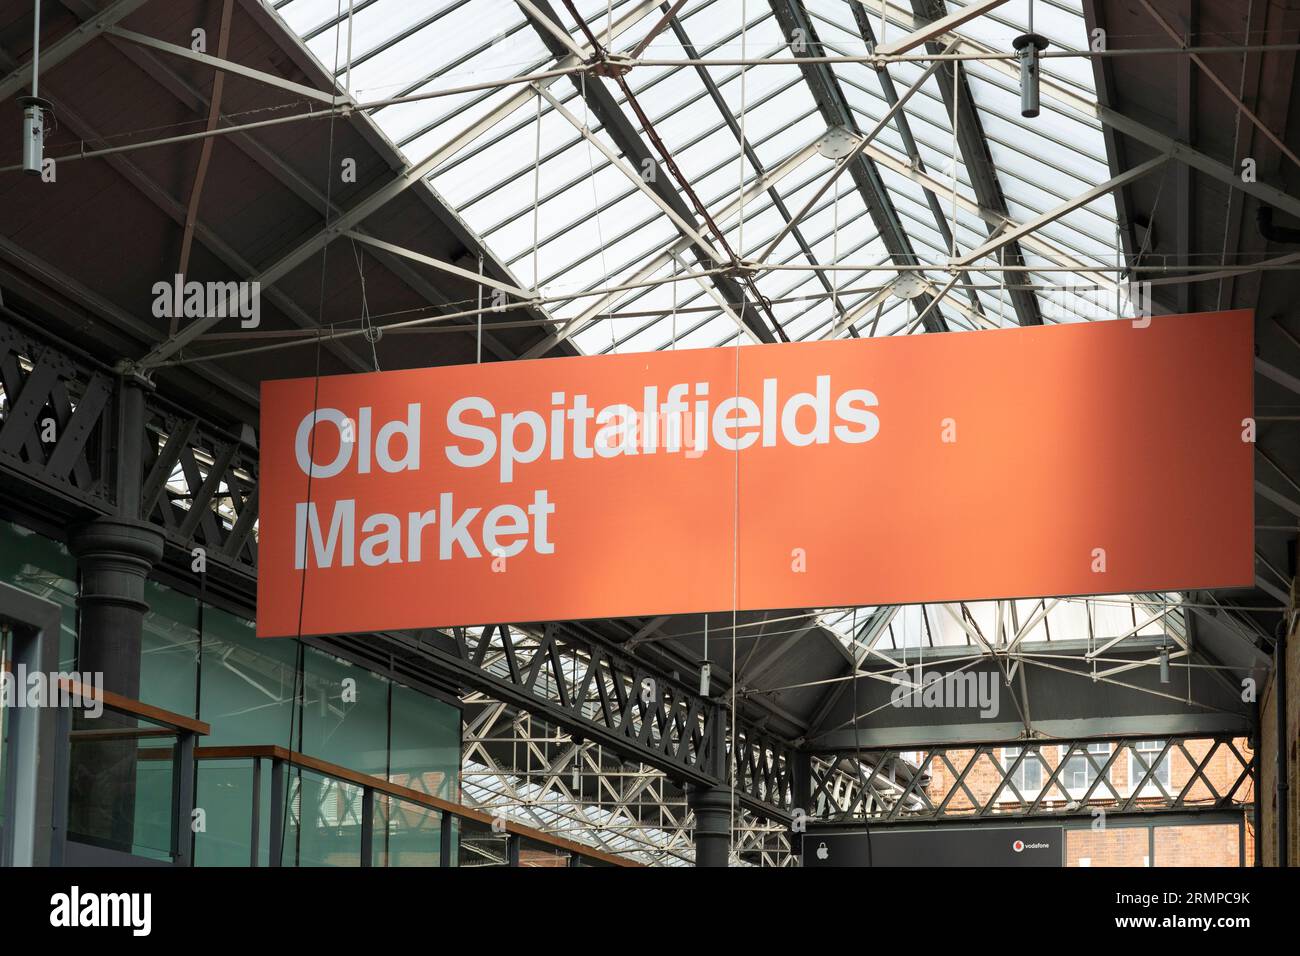 A hanging sign advertising Old Spitalfields Market in Old Spitalfields covered market hall. Spitalfields, London, UK Stock Photo